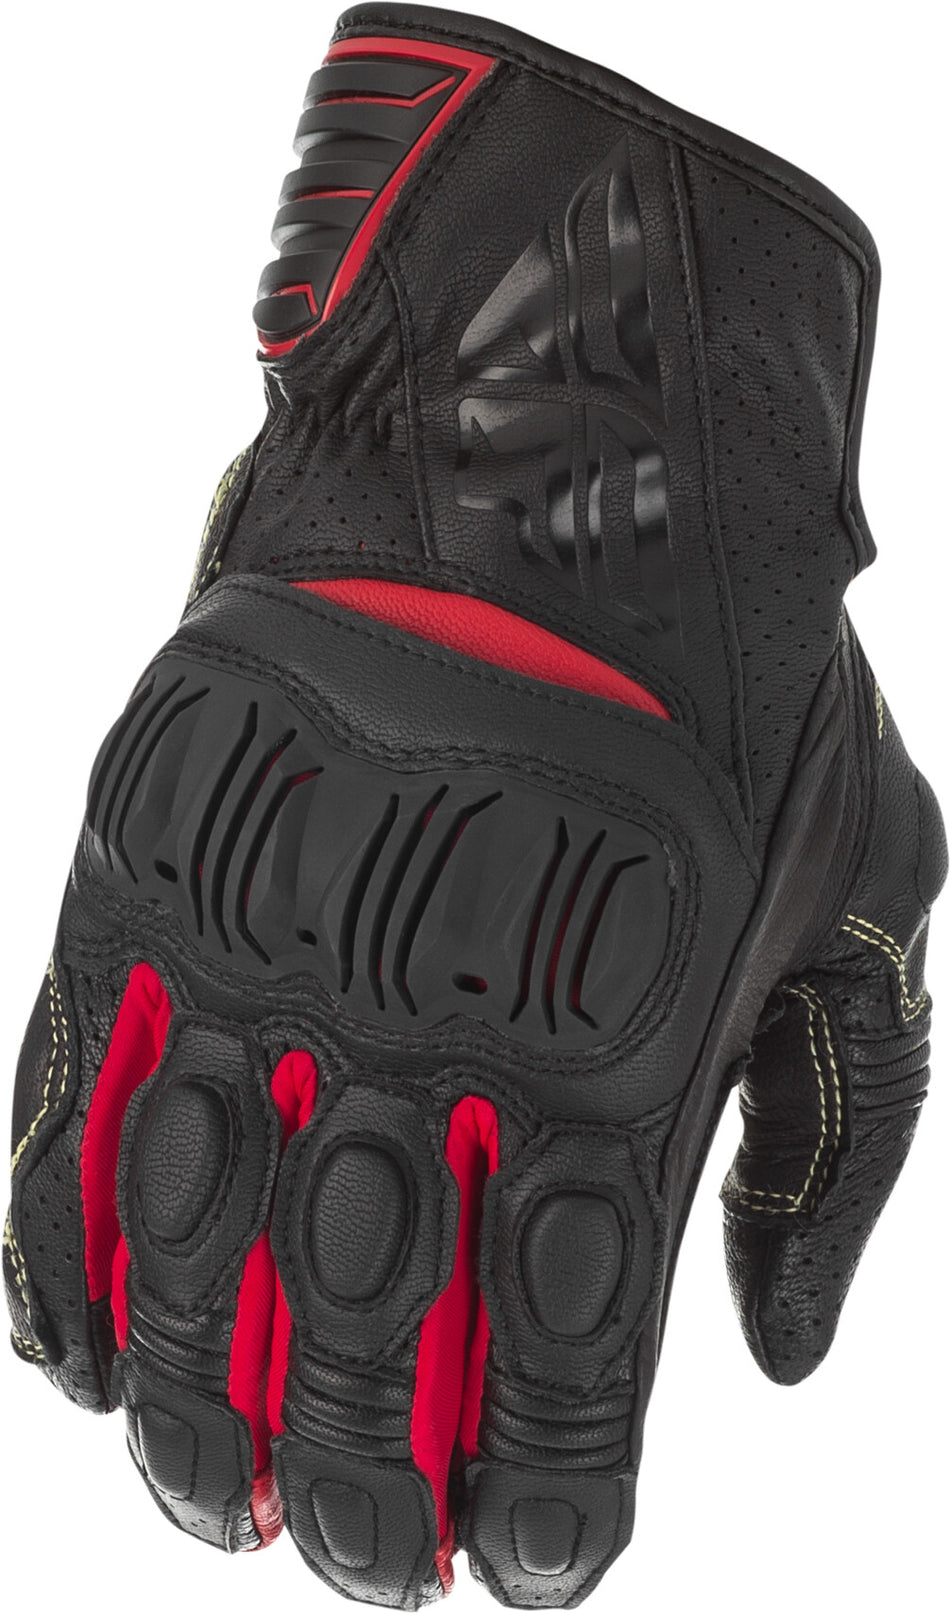 FLY RACING Brawler Gloves Black/Red Md 476-2092M